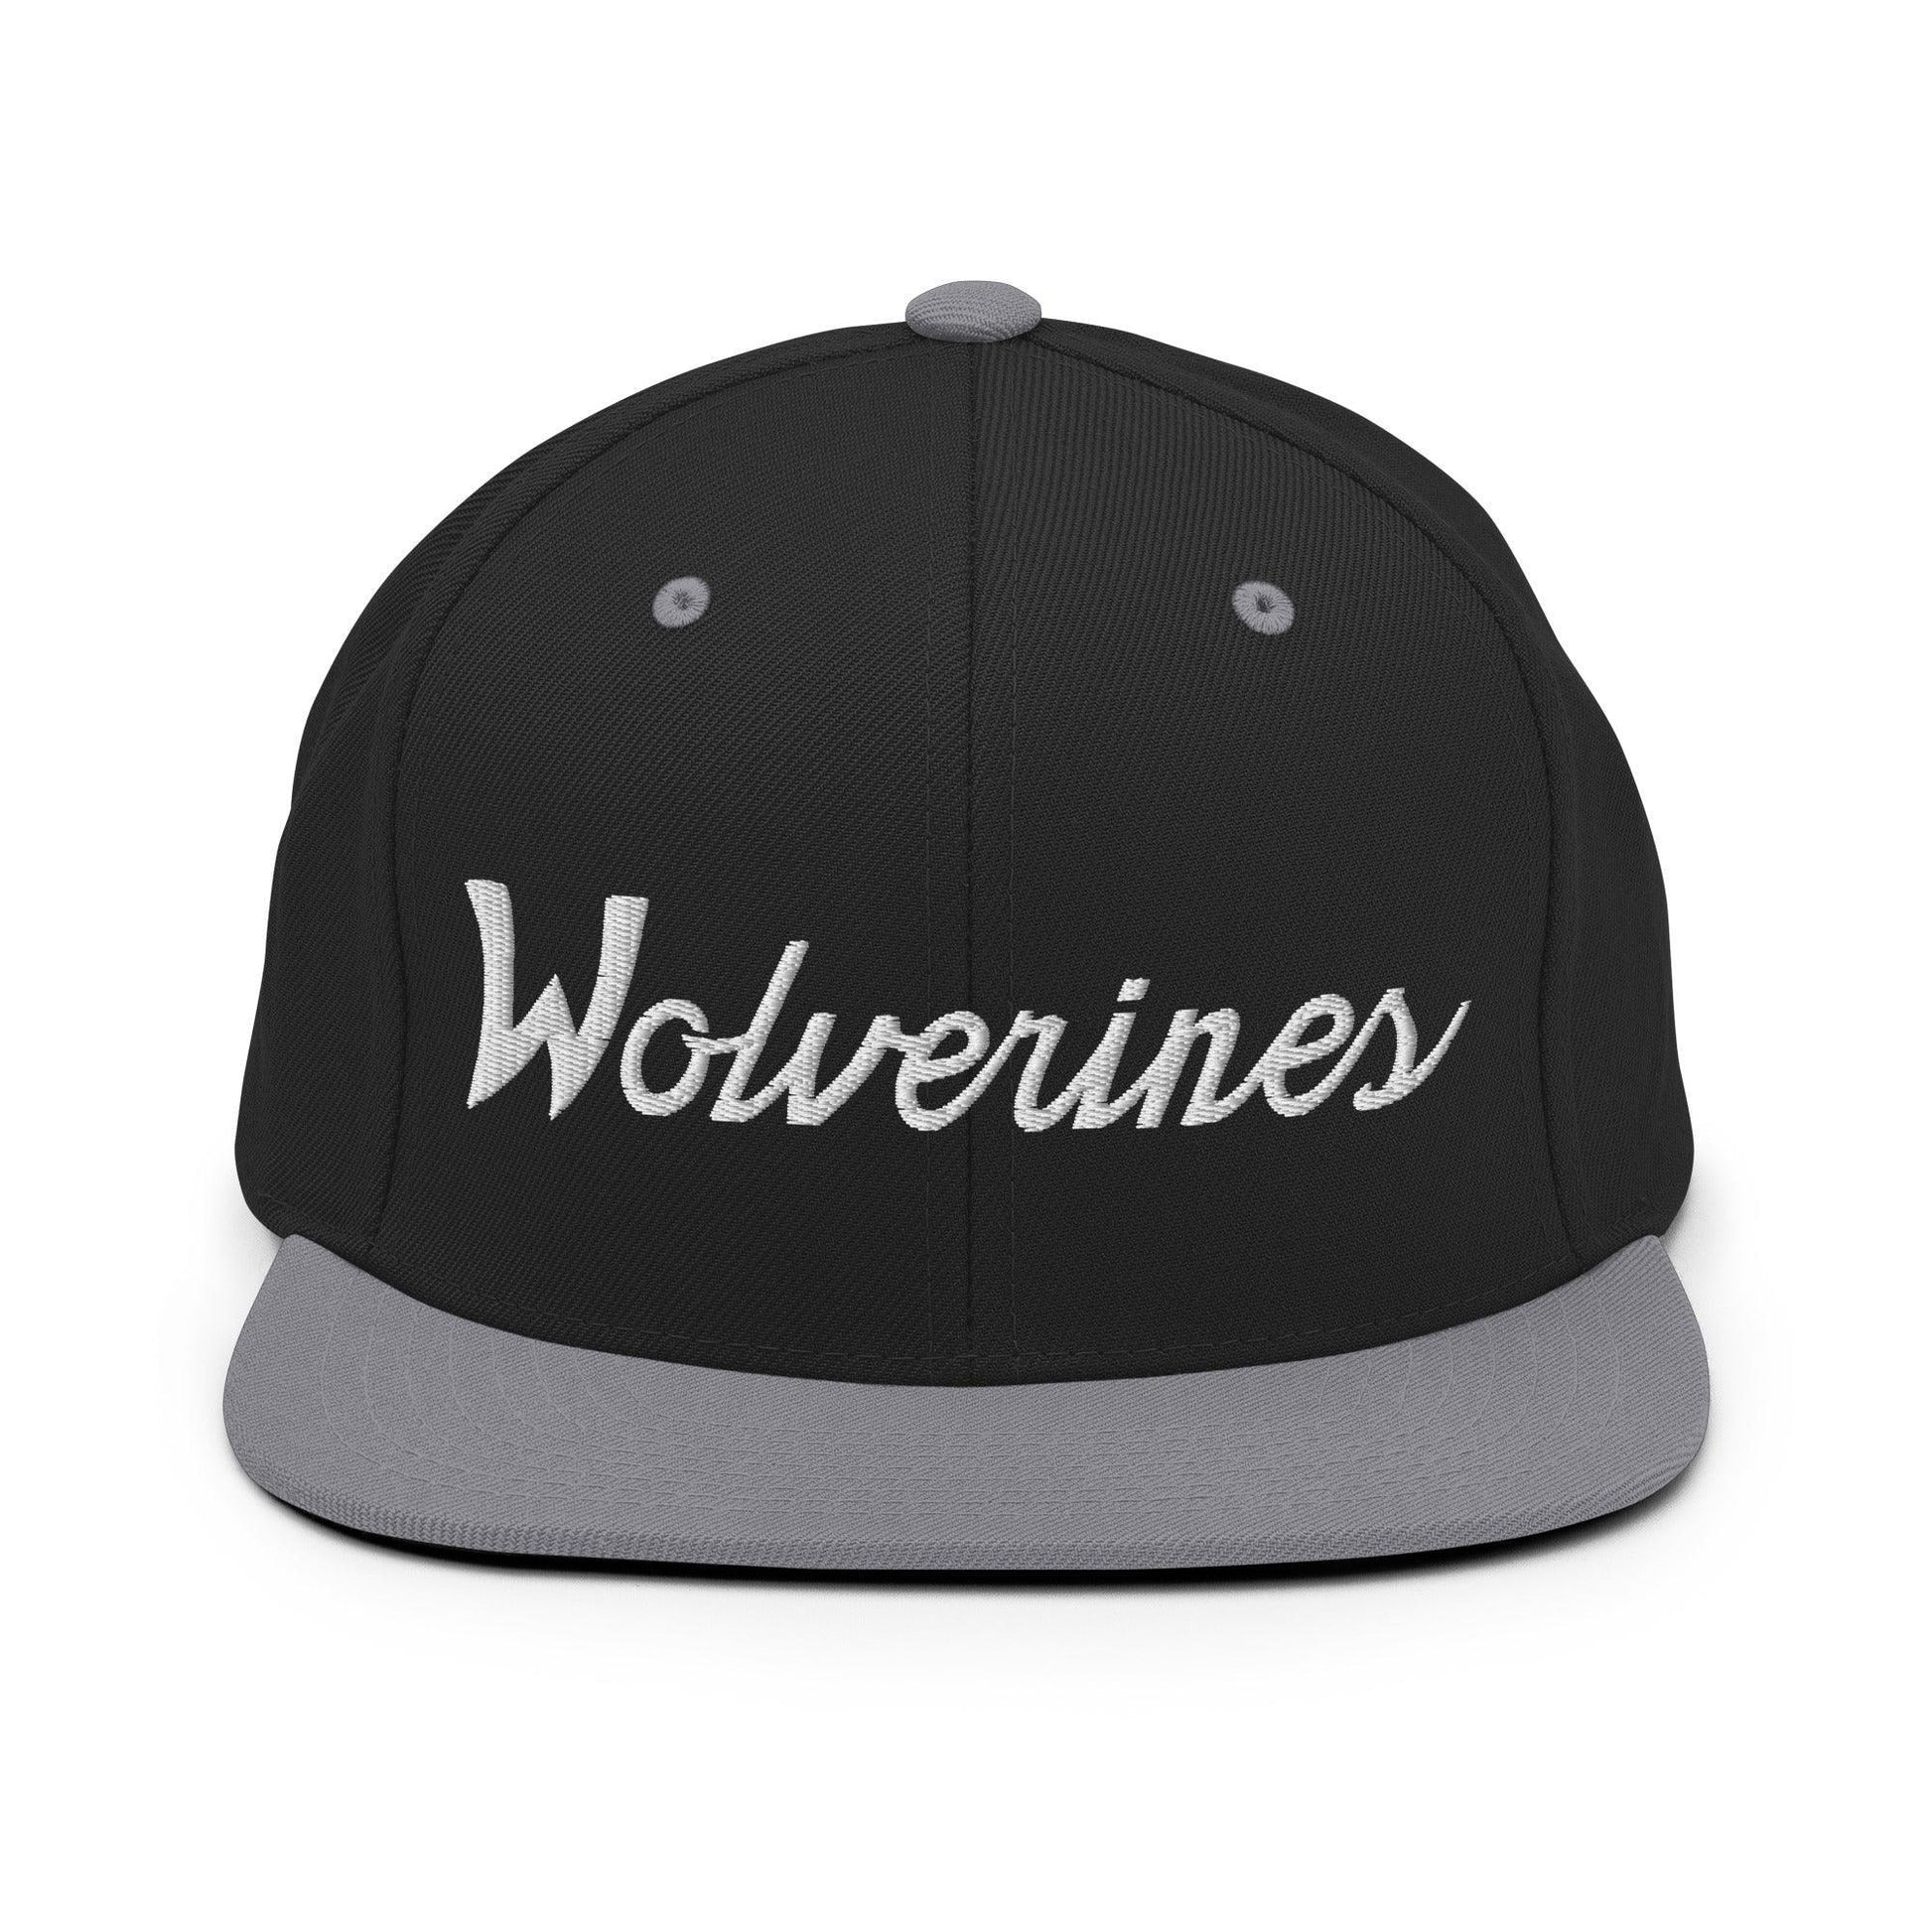 Wolverines School Mascot Script Snapback Hat Black/ Silver